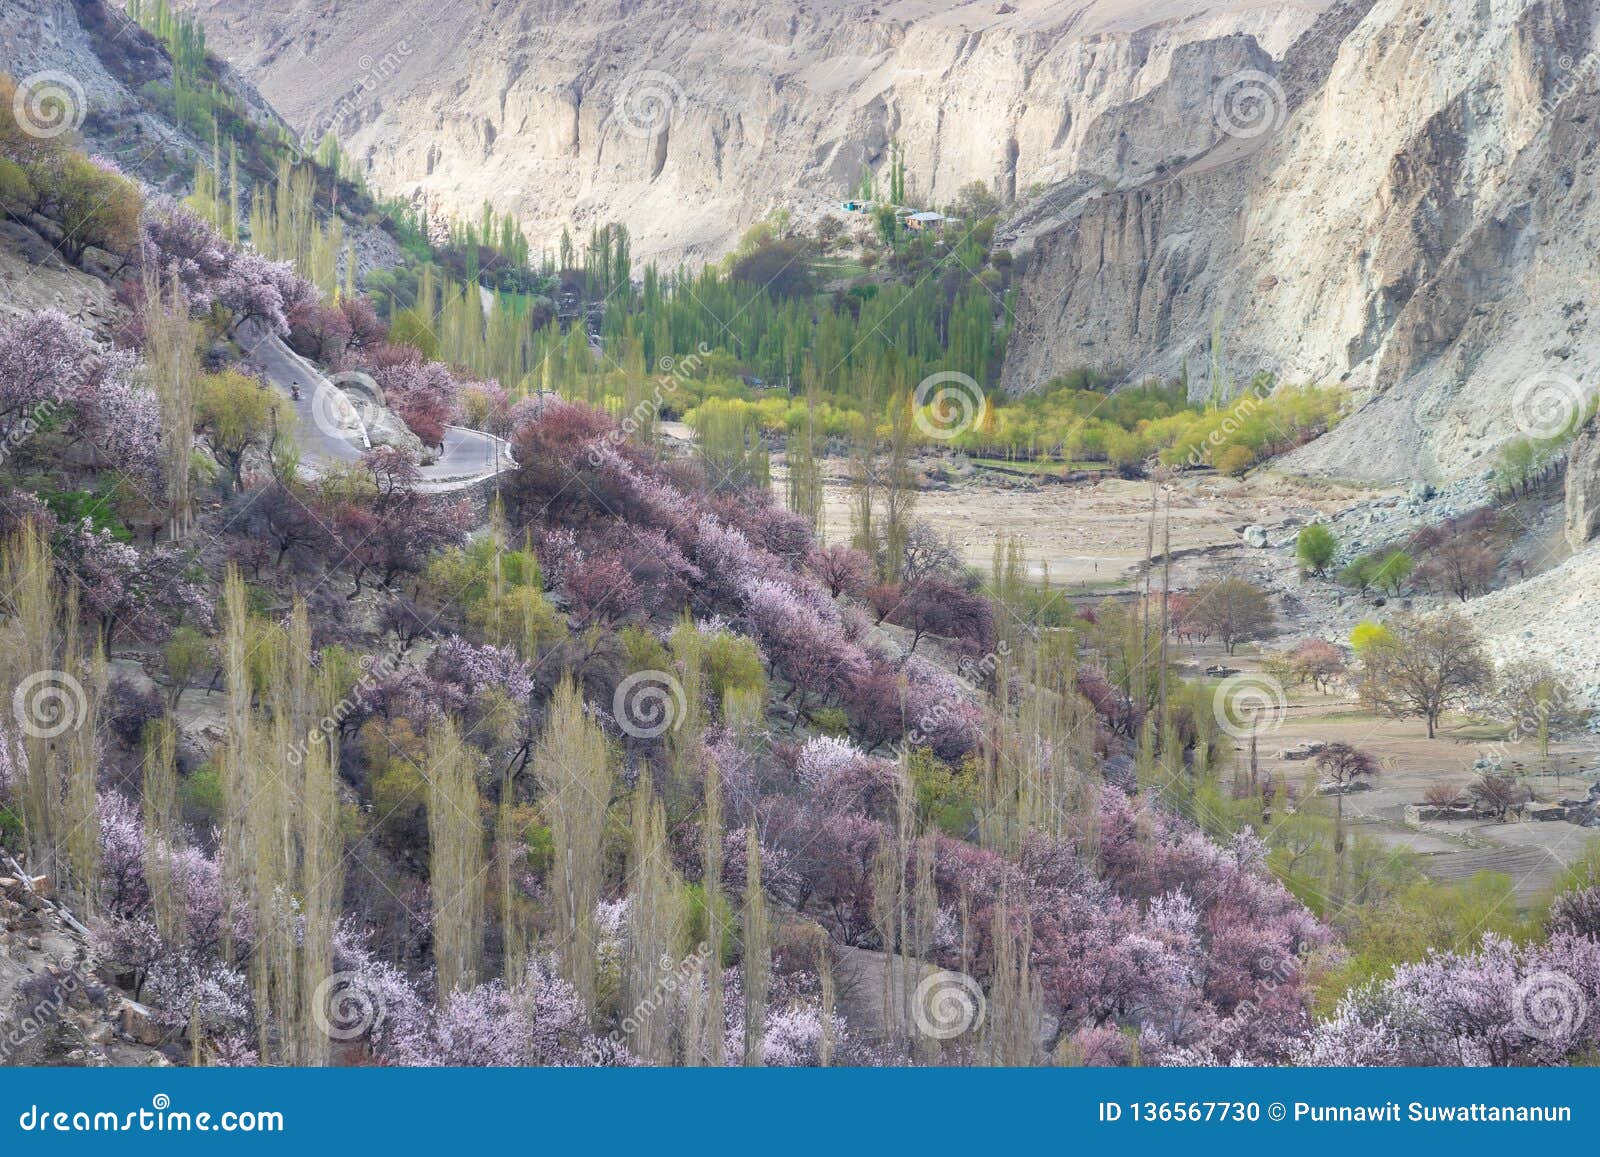 blossom in nagar valley in spring season, gilgit baltistan, pakistan